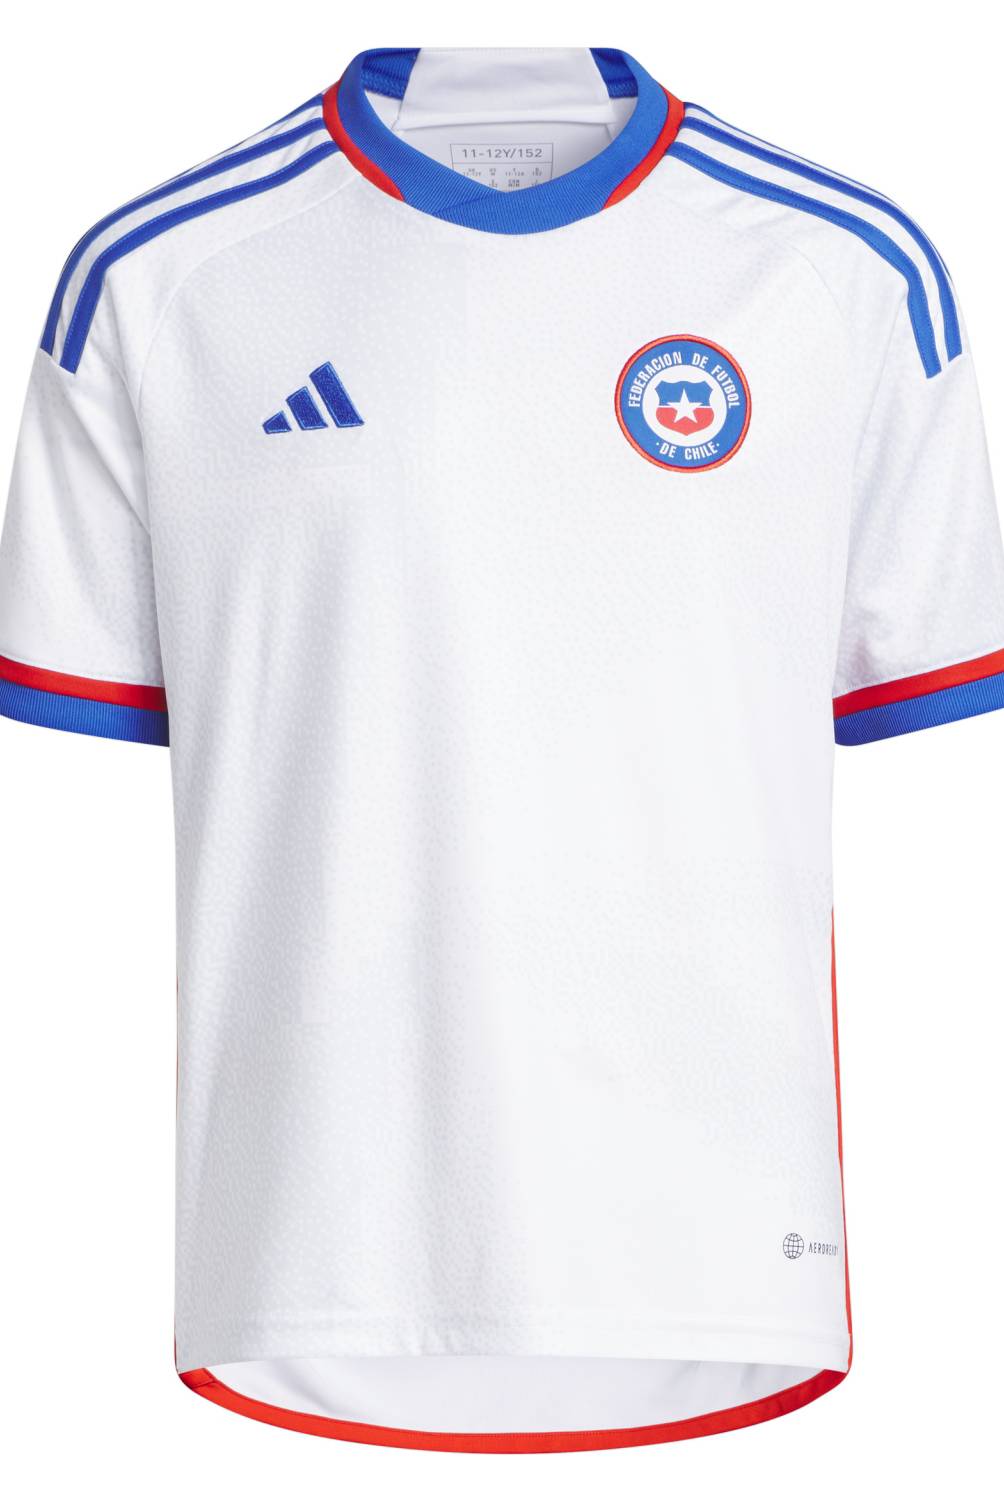 ADIDAS - Camiseta De Fútbol Selección Chilena Visita Hombre Adidas